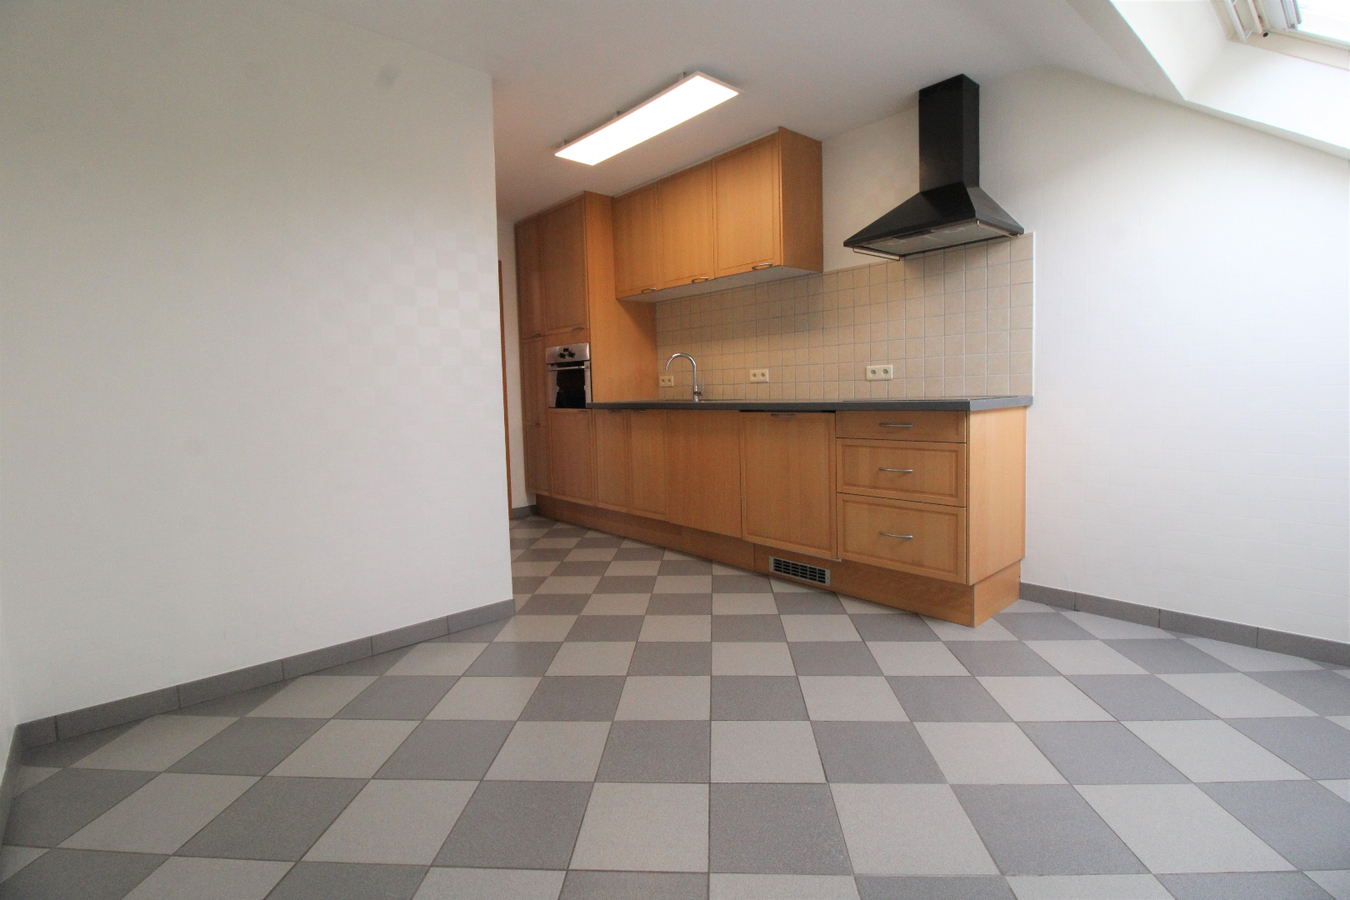 Duplex appartement met 2 slaapkamers en garage te Roeselare 